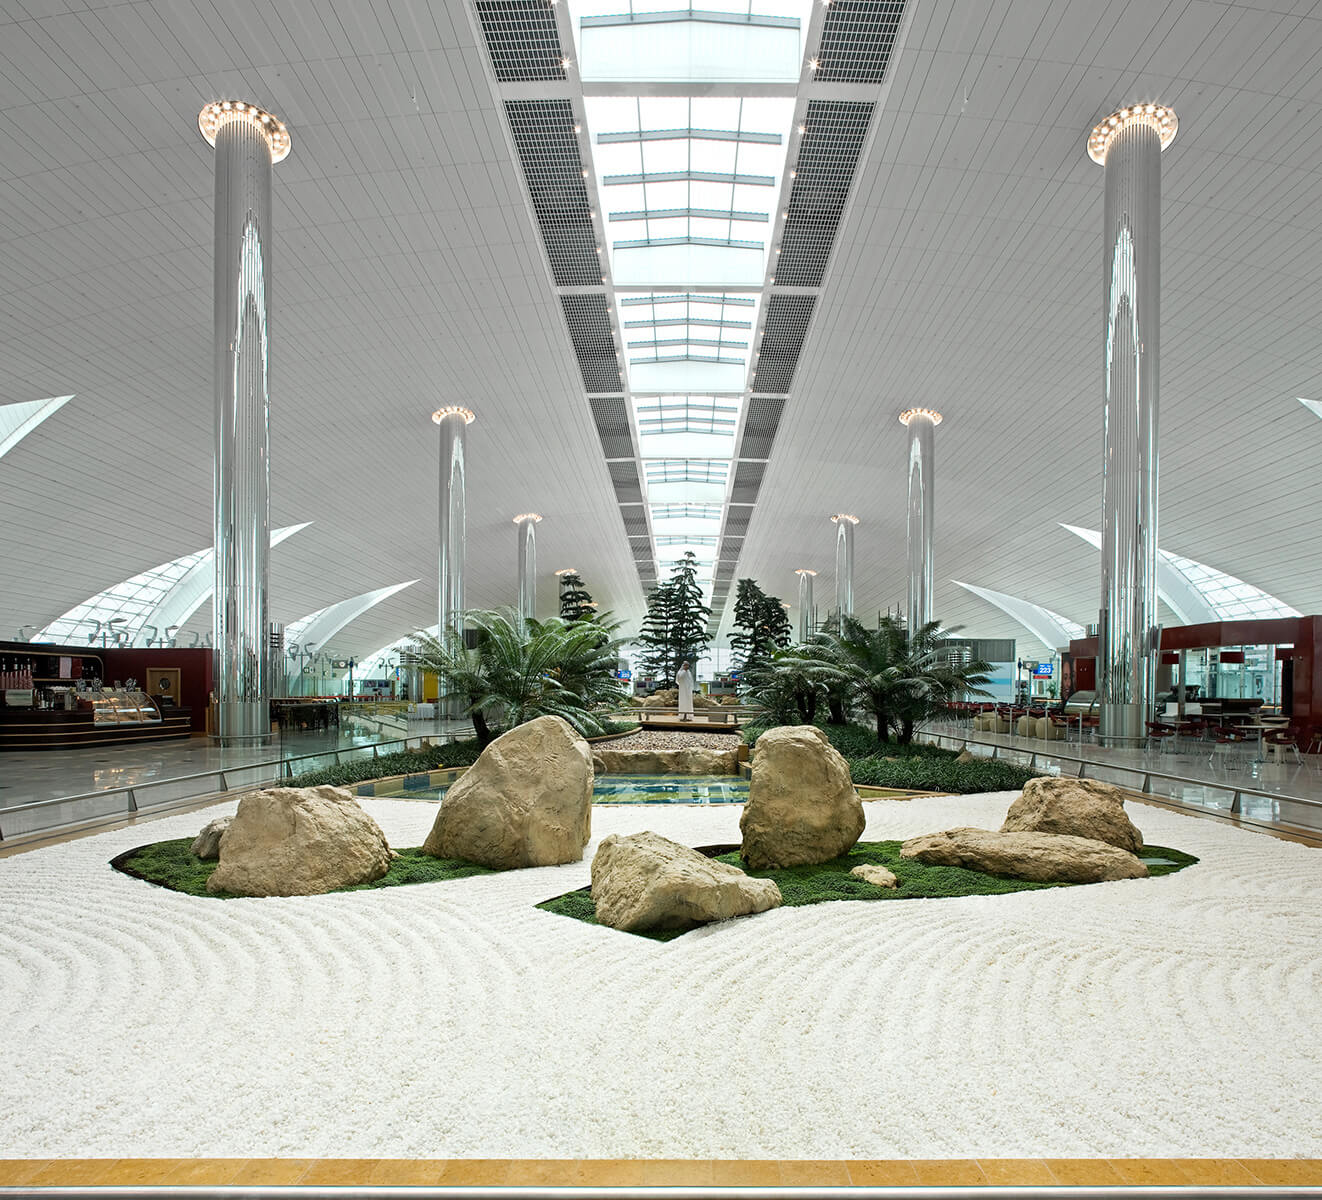 Interior Photography Dubai: International  Airport Terminal 3: Emirates Airlines